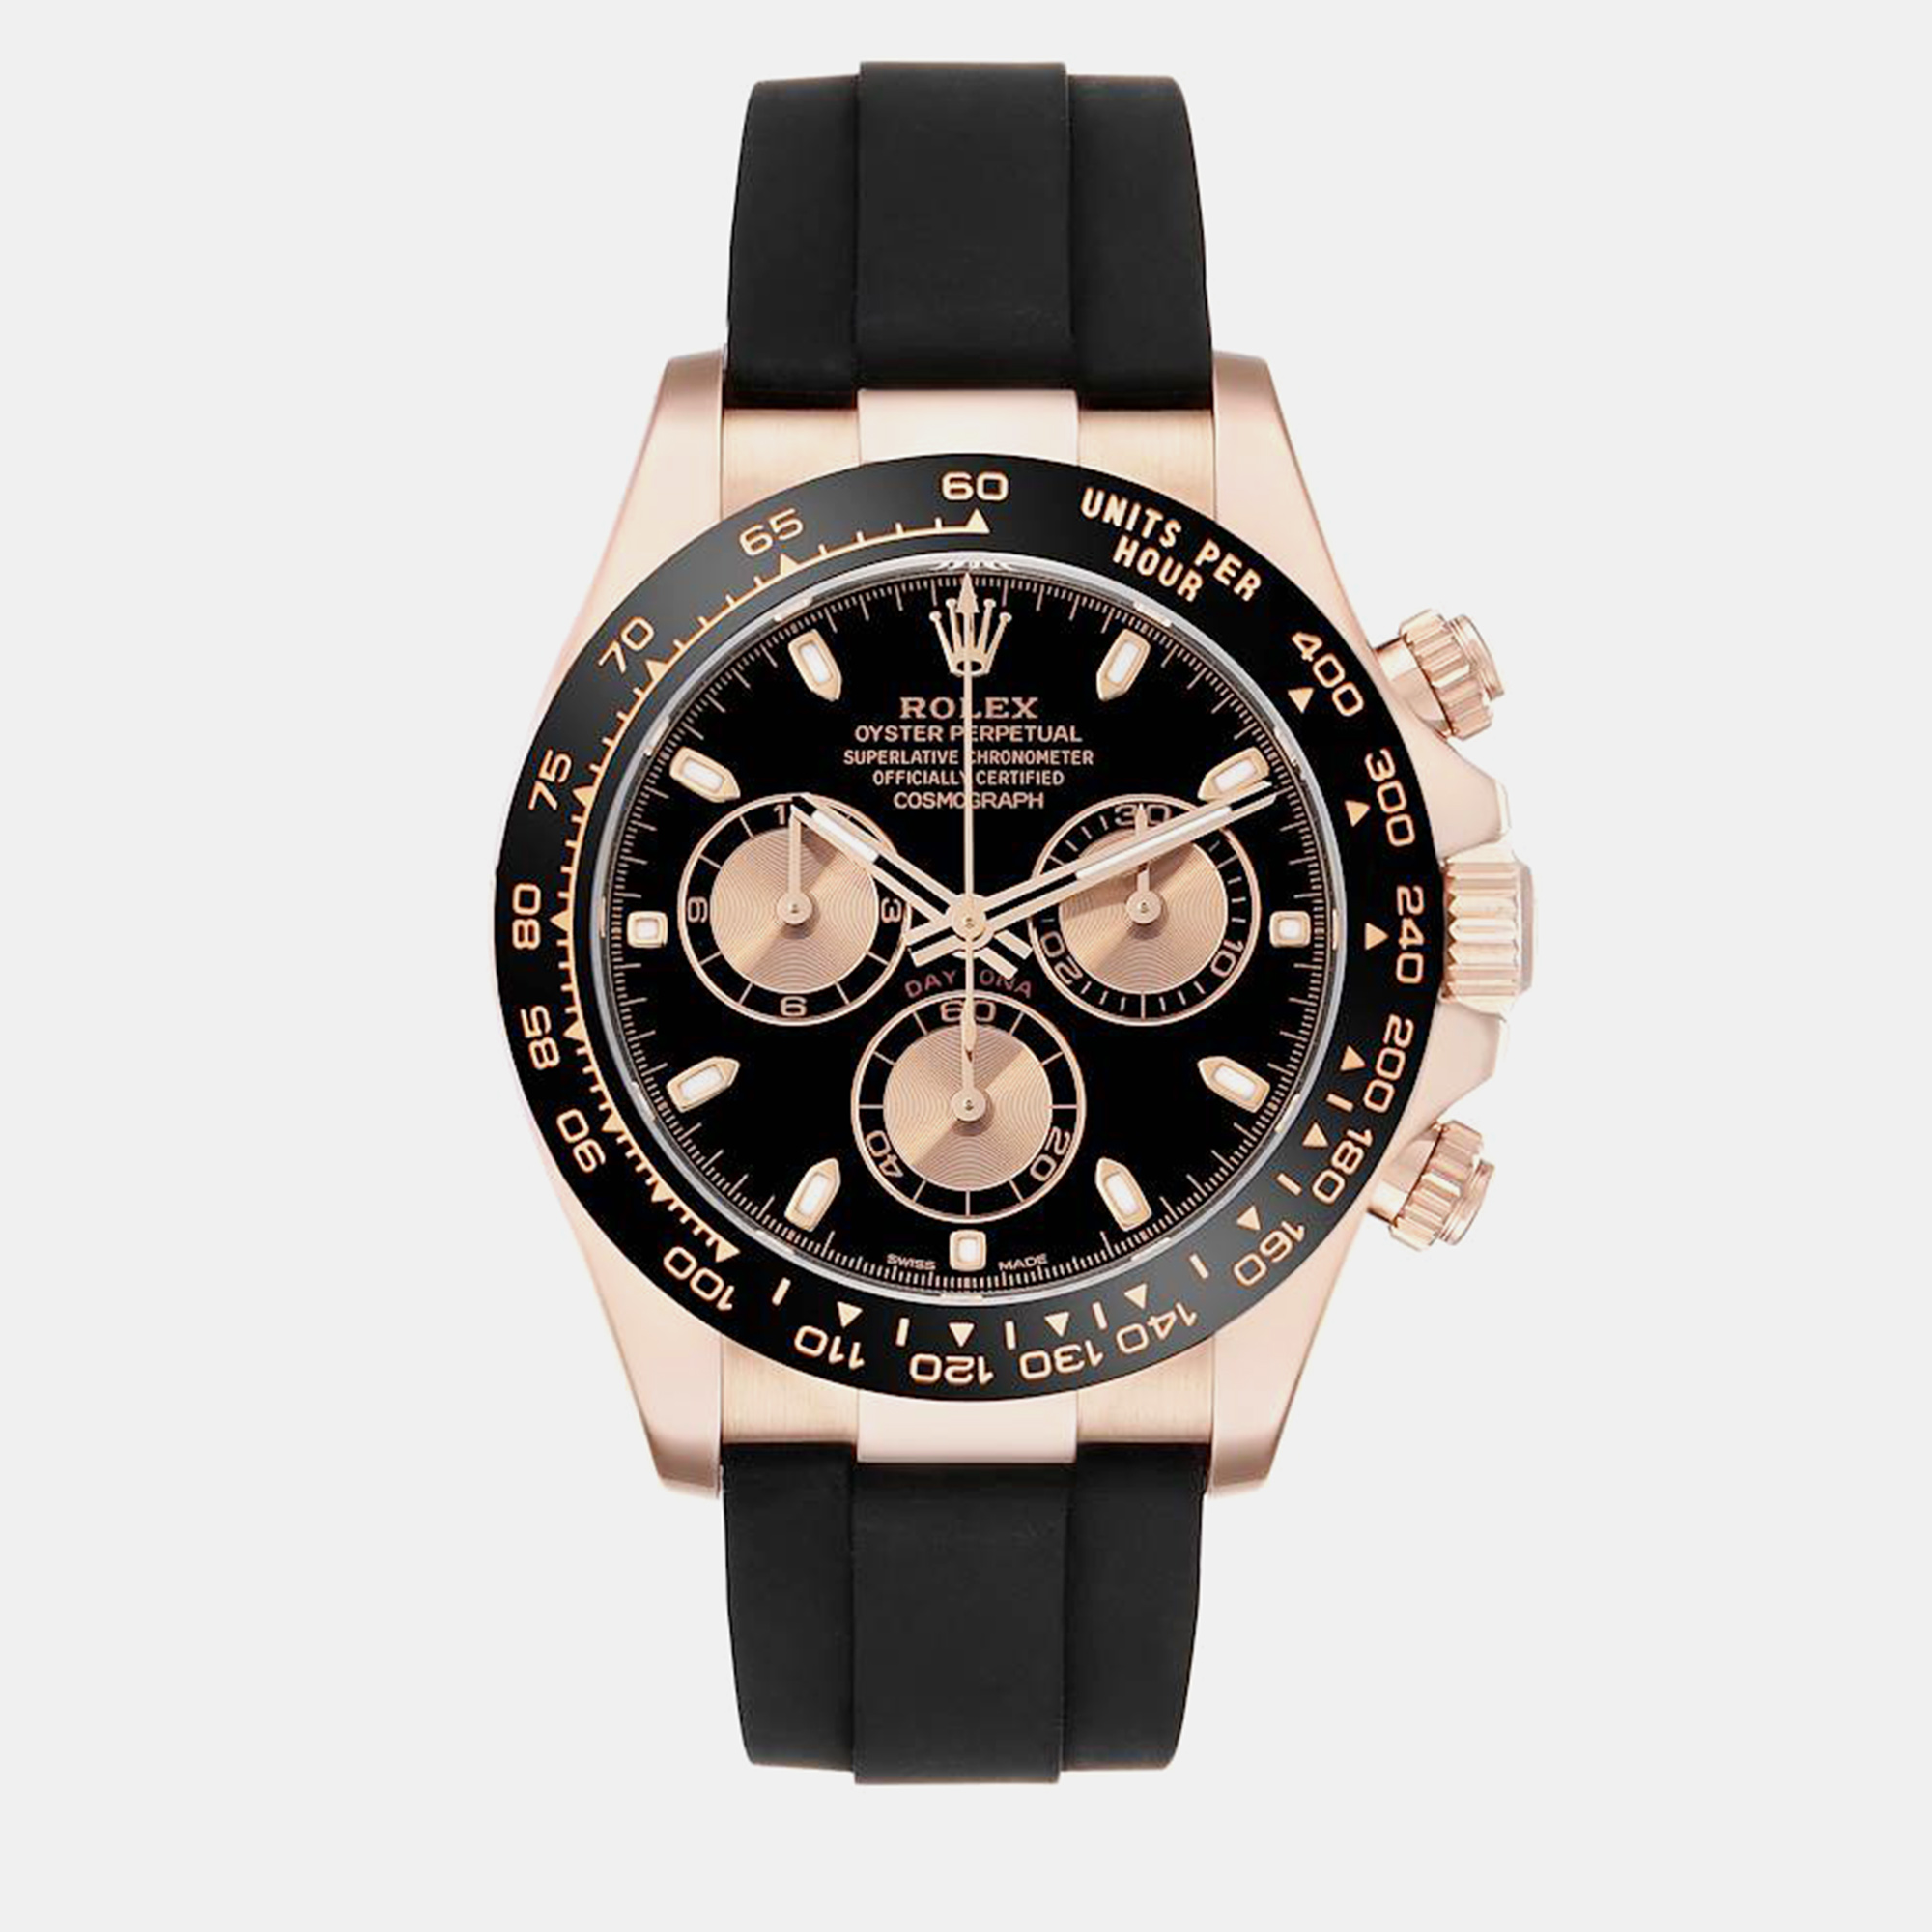 Rolex cosmograph daytona oysterflex rose gold men's watch 116515 40 mm